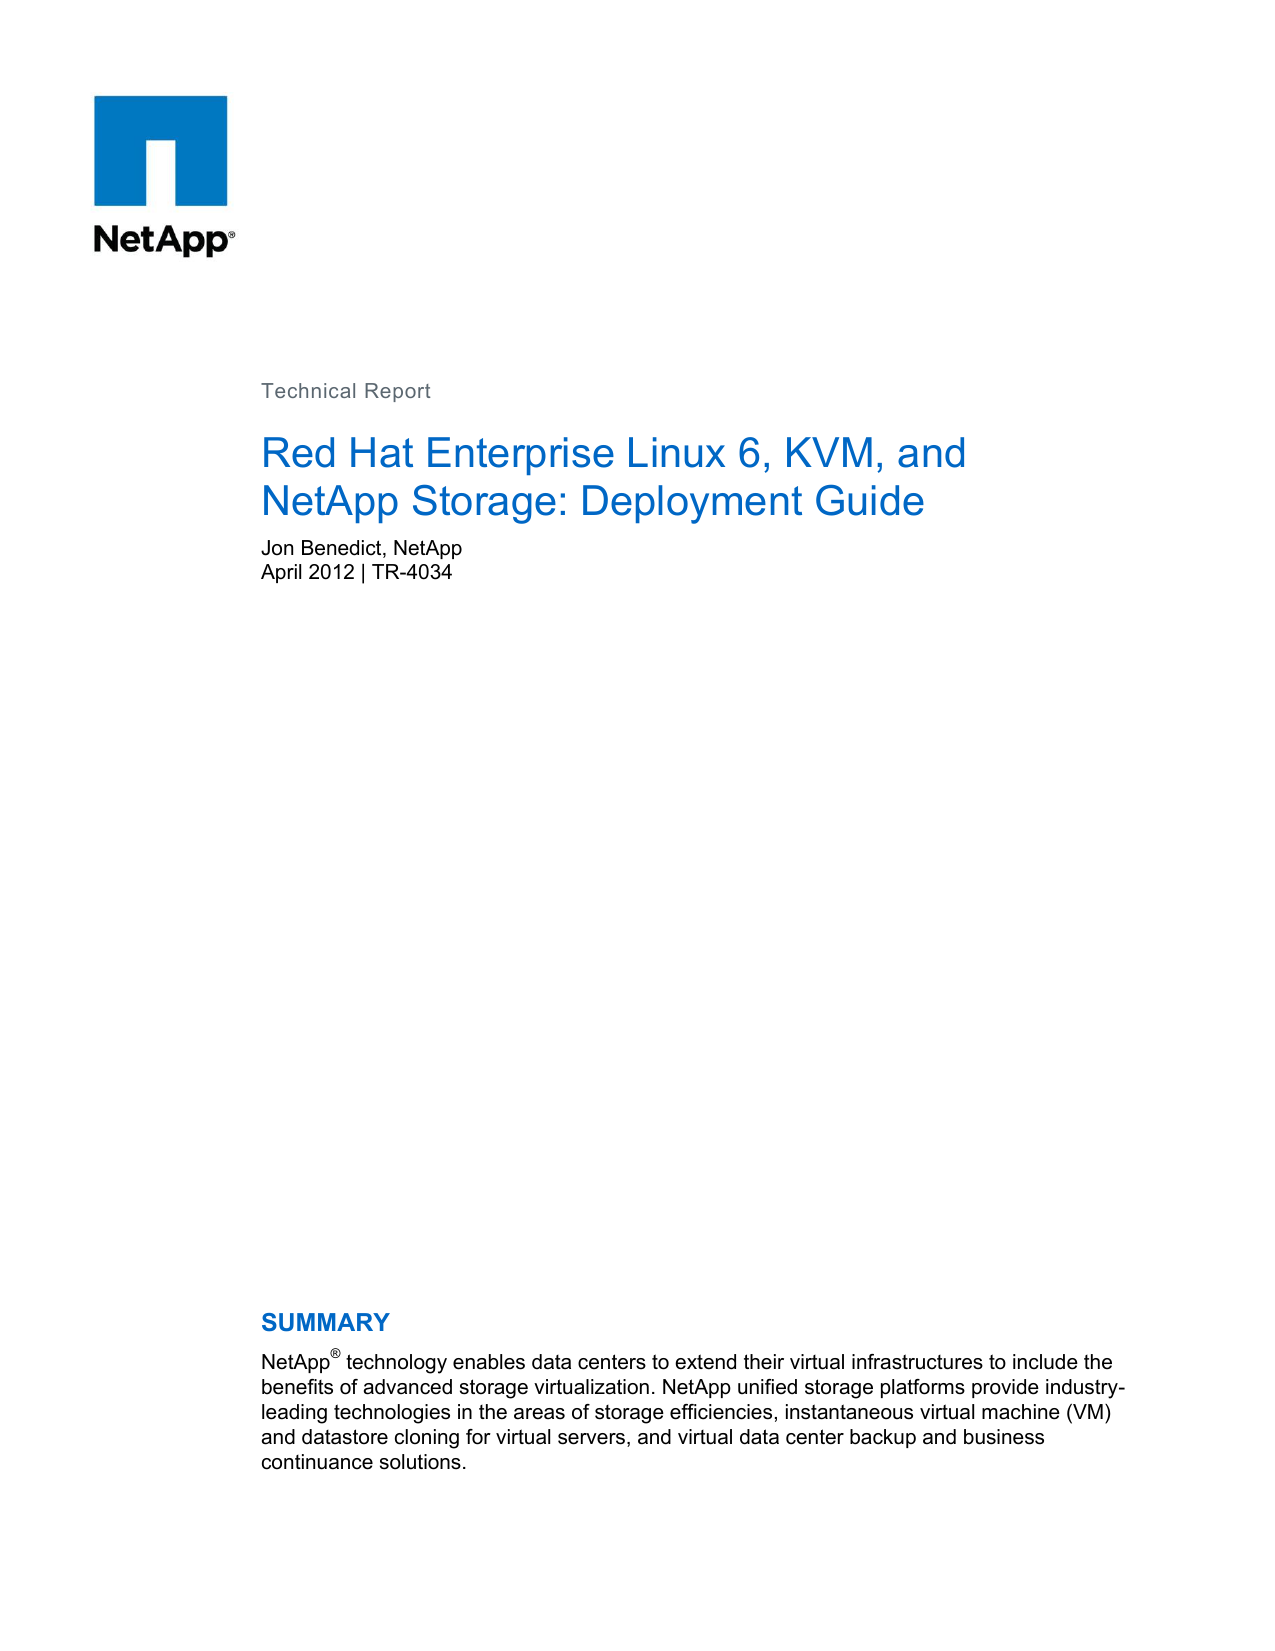 red hat enterprise linux for virtual datacenters